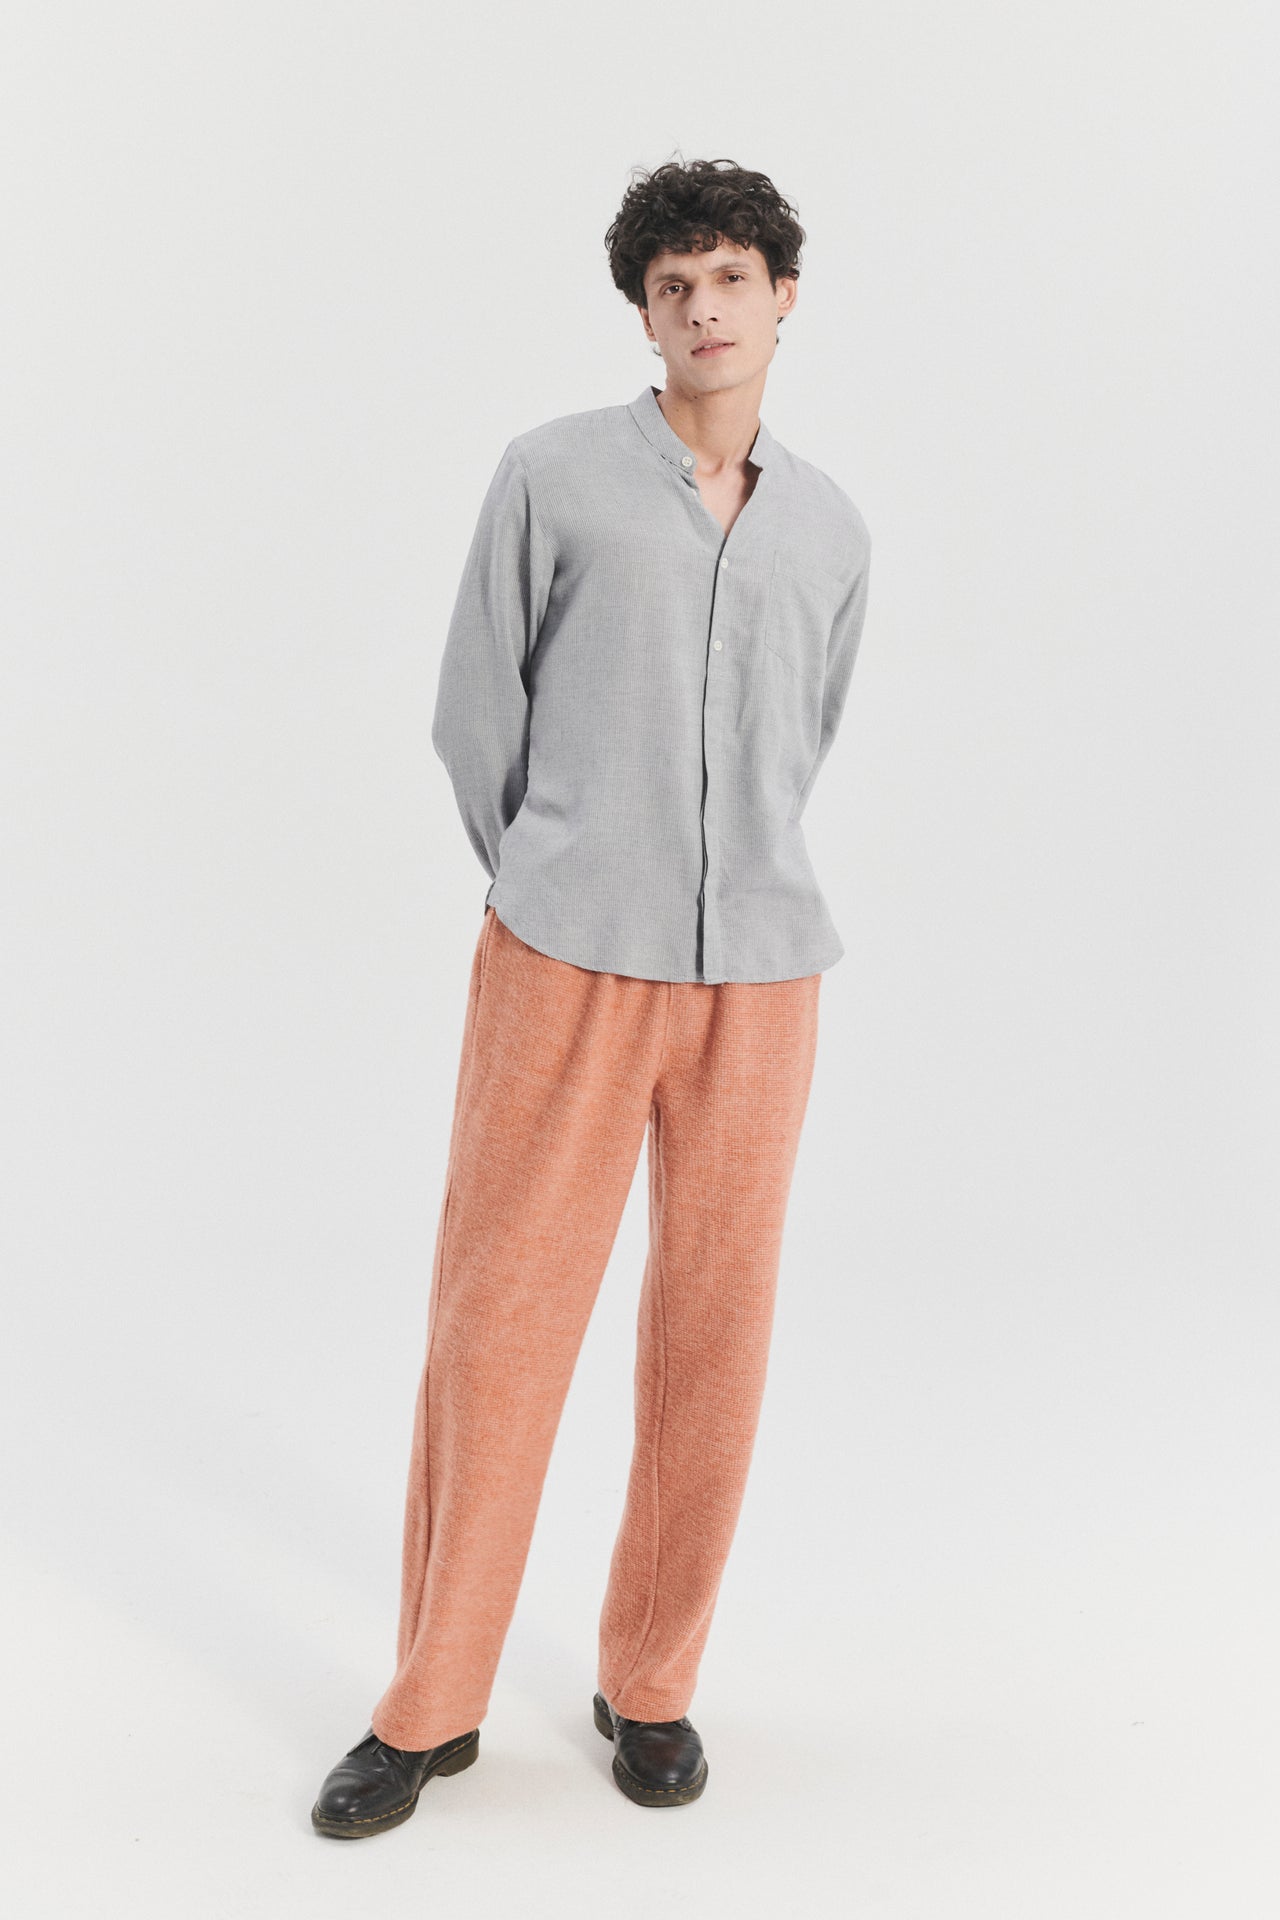 Zen Grandad Collar Shirt in a Finely Grey Striped Portuguese Merino Wool and Modal